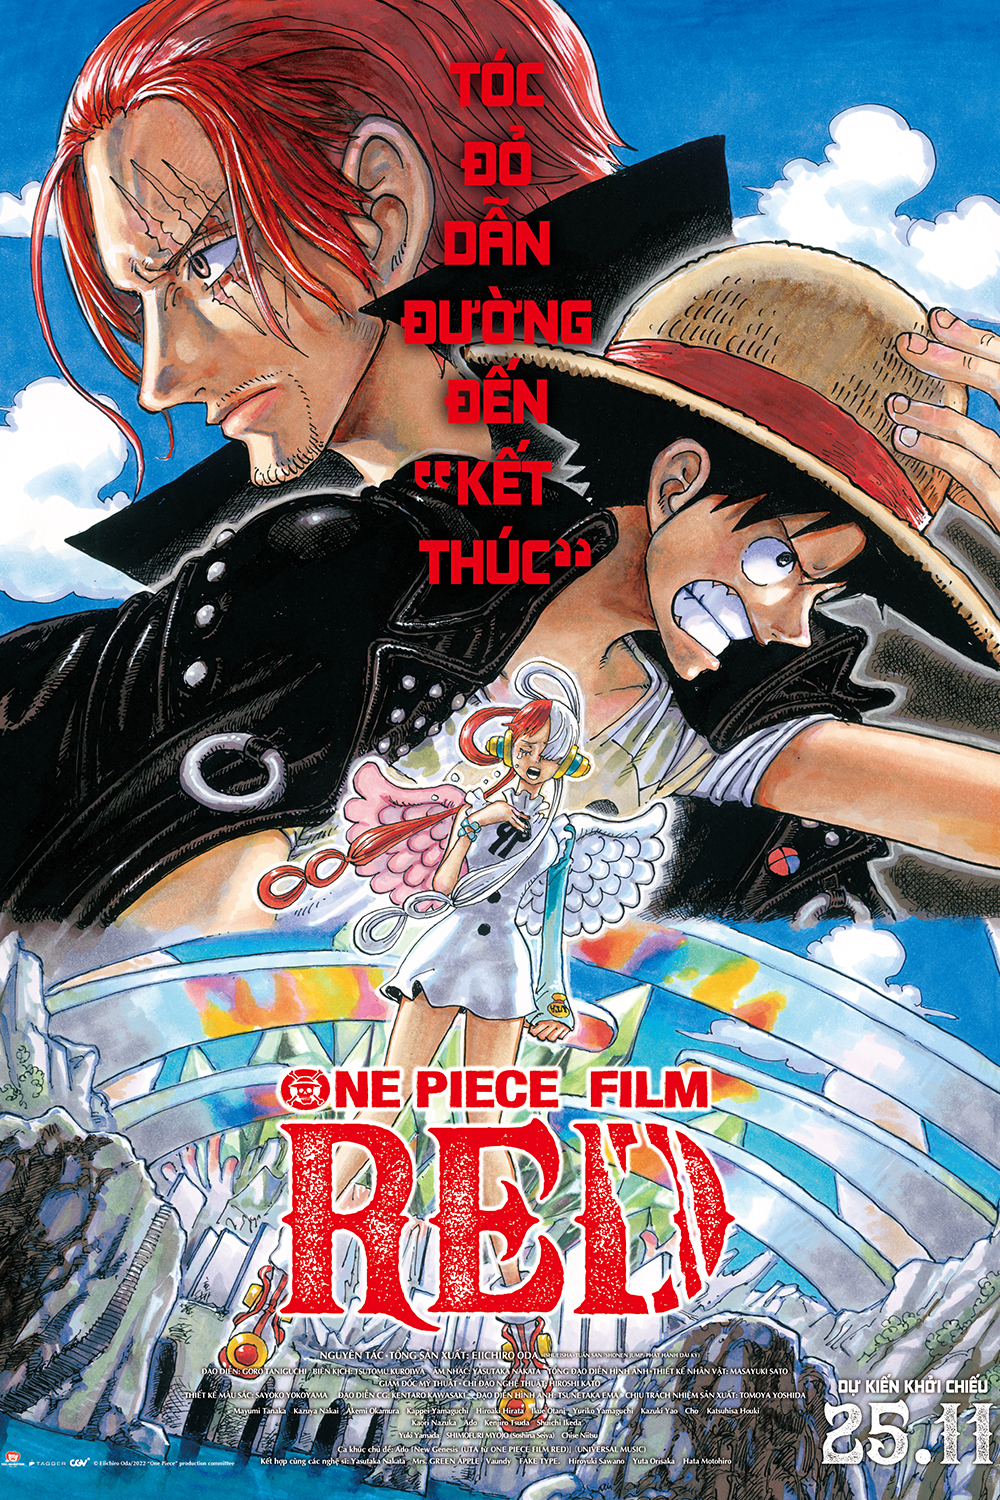 Harper's Bazaar_Phim anime One Piece Film Red_02